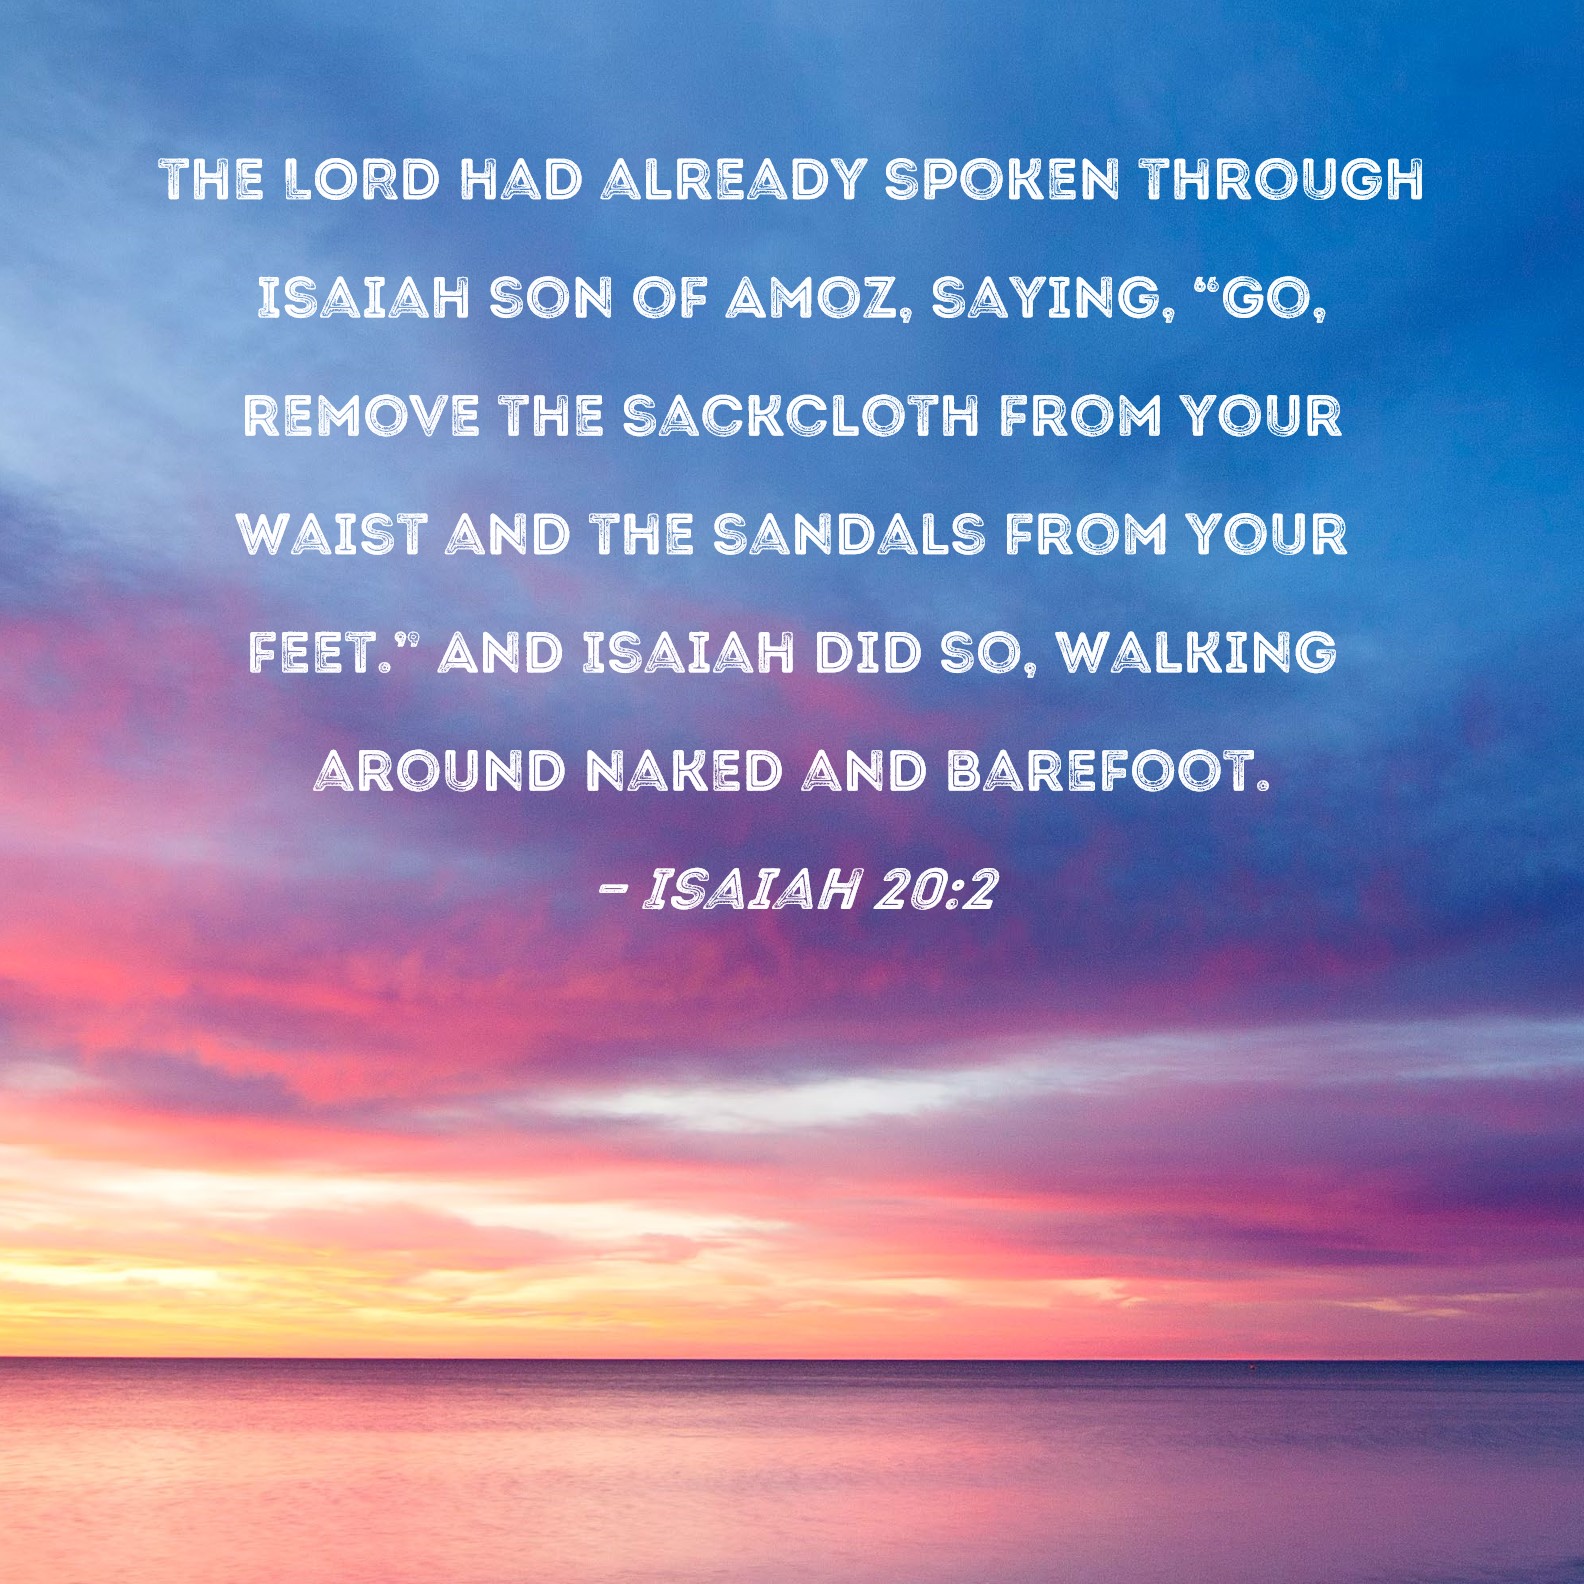 Isaiah 20:2 the LORD had already spoken through Isaiah son of Amoz ...